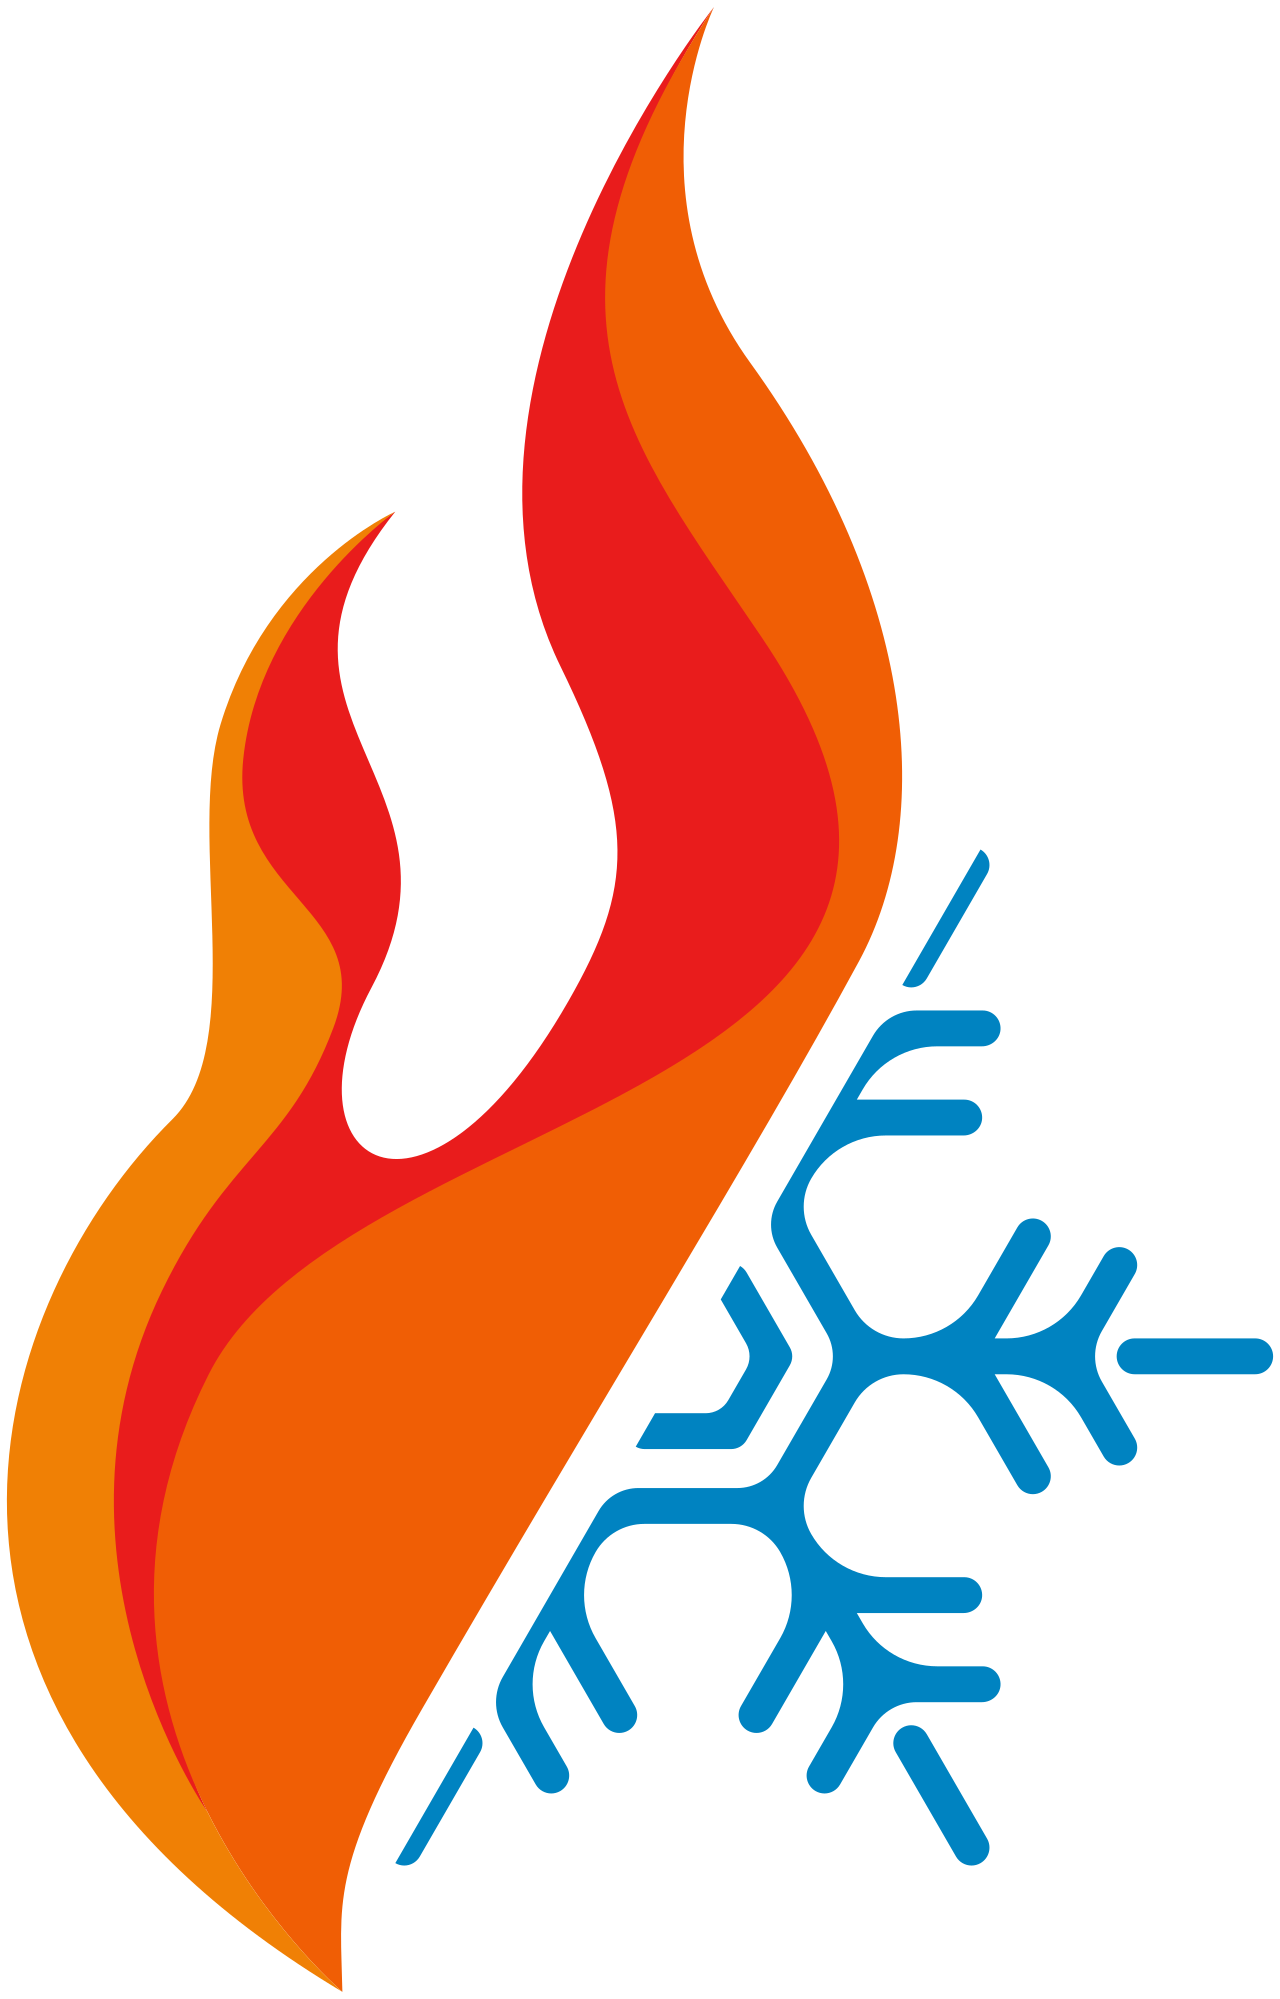 Freezingheat Air Cond & Heat, LLC Logo